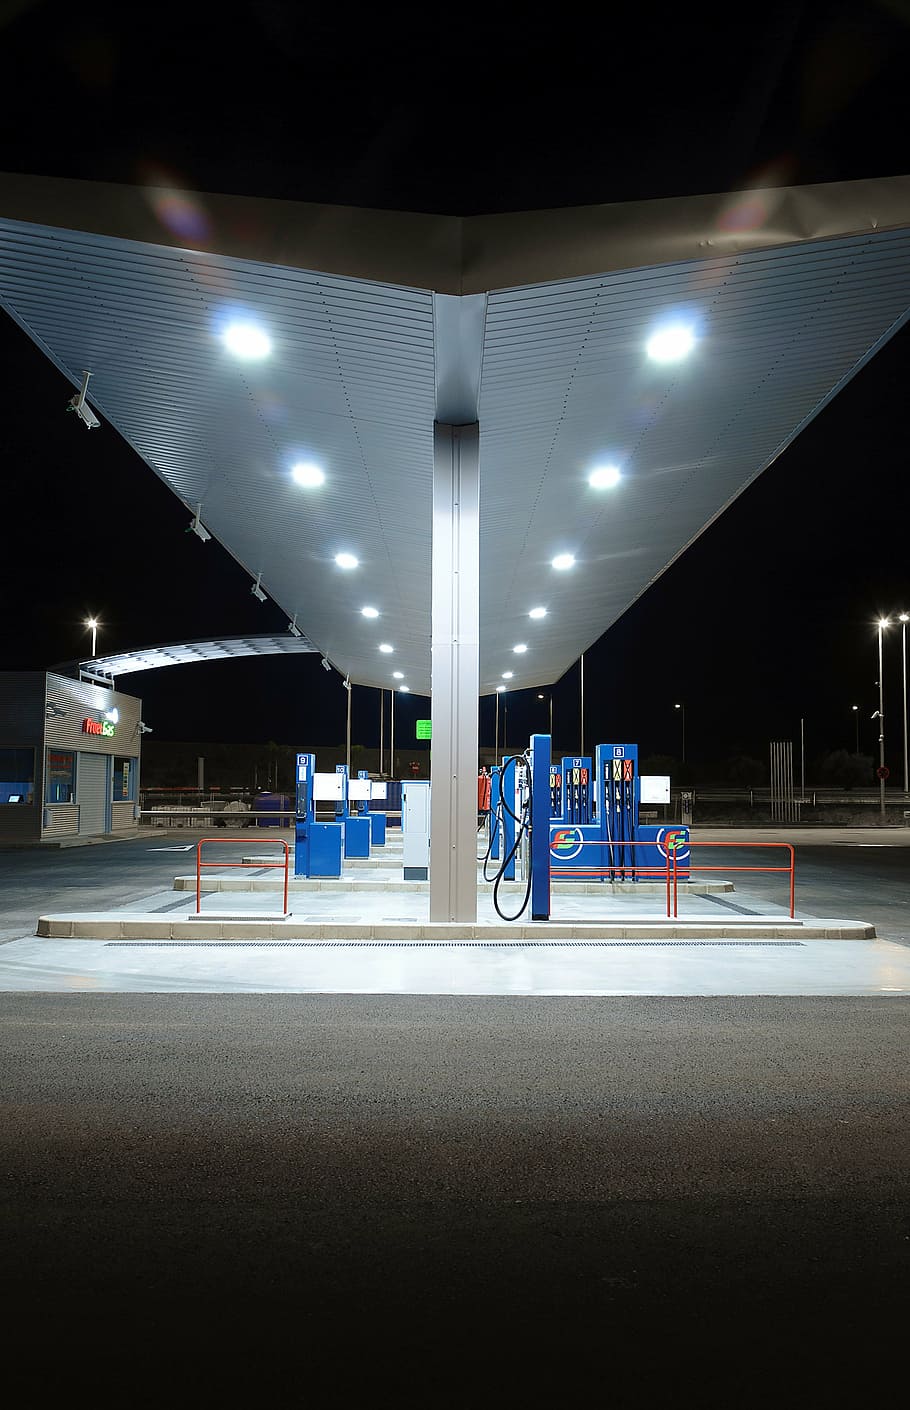 gasoline station, froet gas, petrol station, gasoline, discount, professional, illuminated, transportation, lighting equipment, architecture